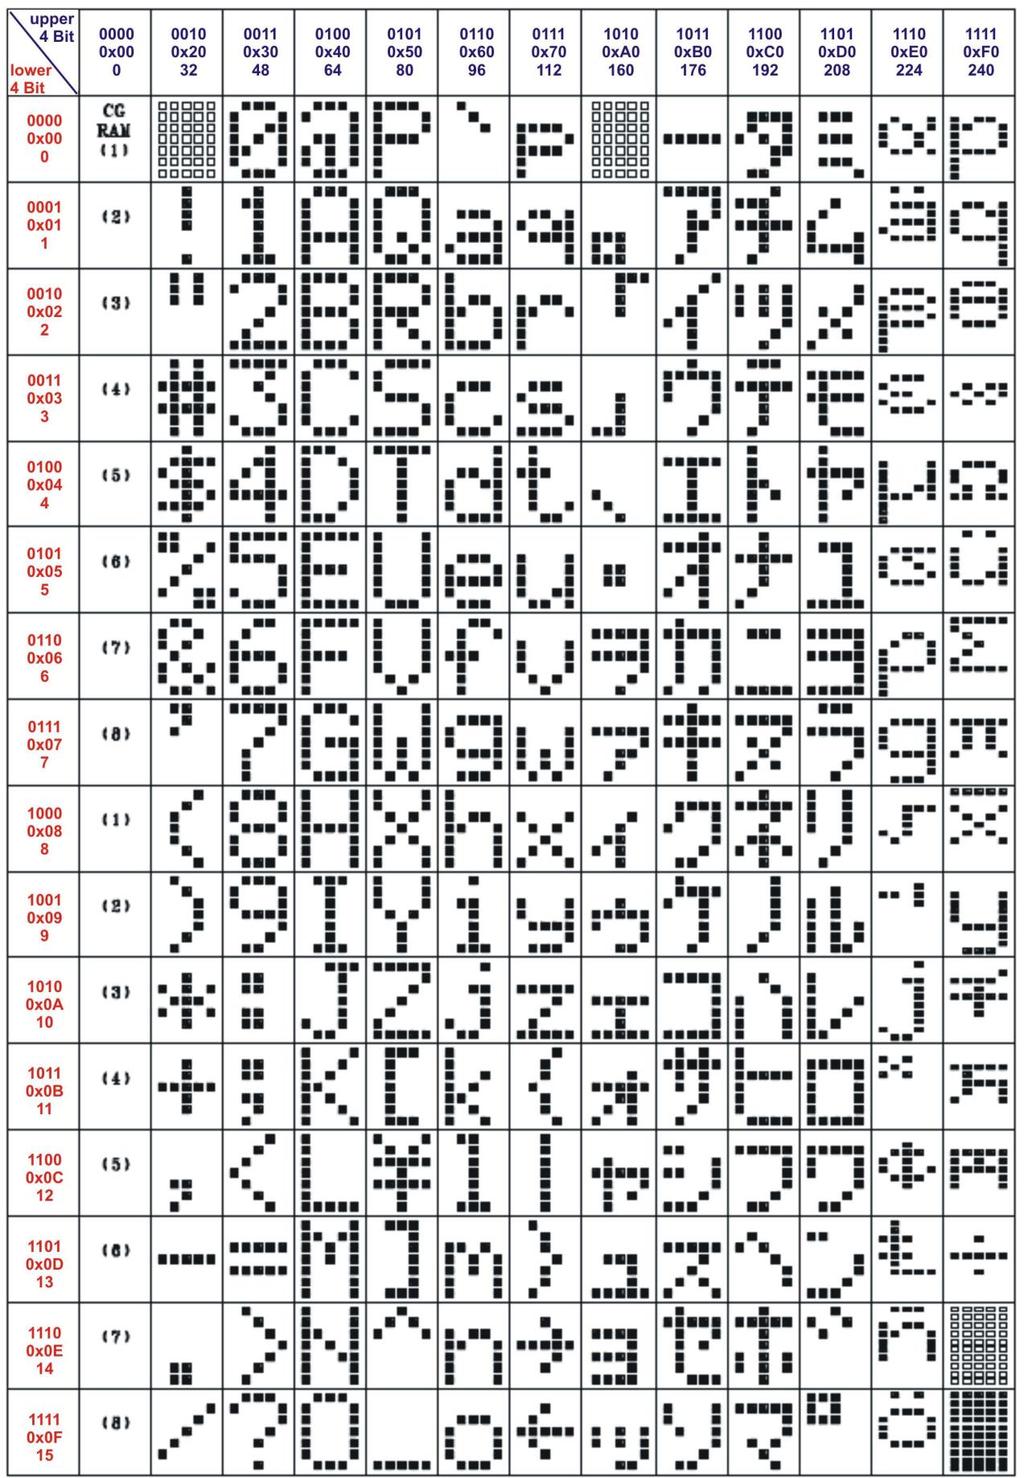 2.1b Anhang: ASCII Code Tabelle (LCD-Display: Displaytech